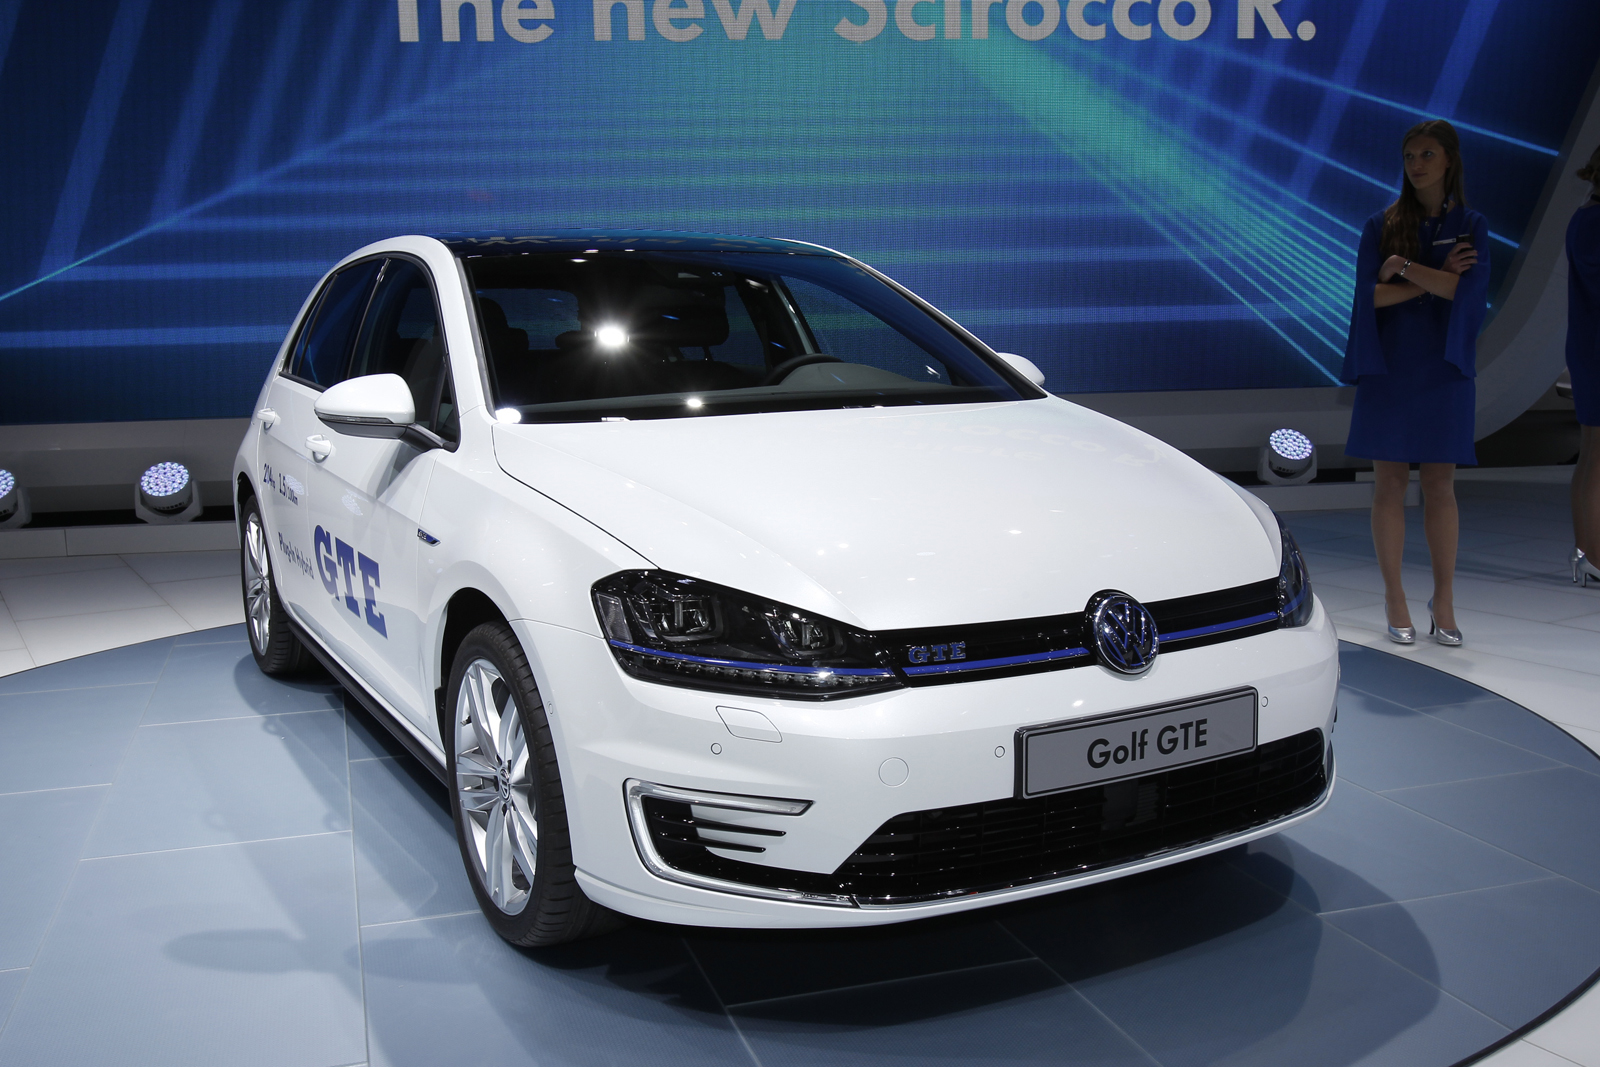 Hot electric Volkswagen Golf GTE revealed | Autocar